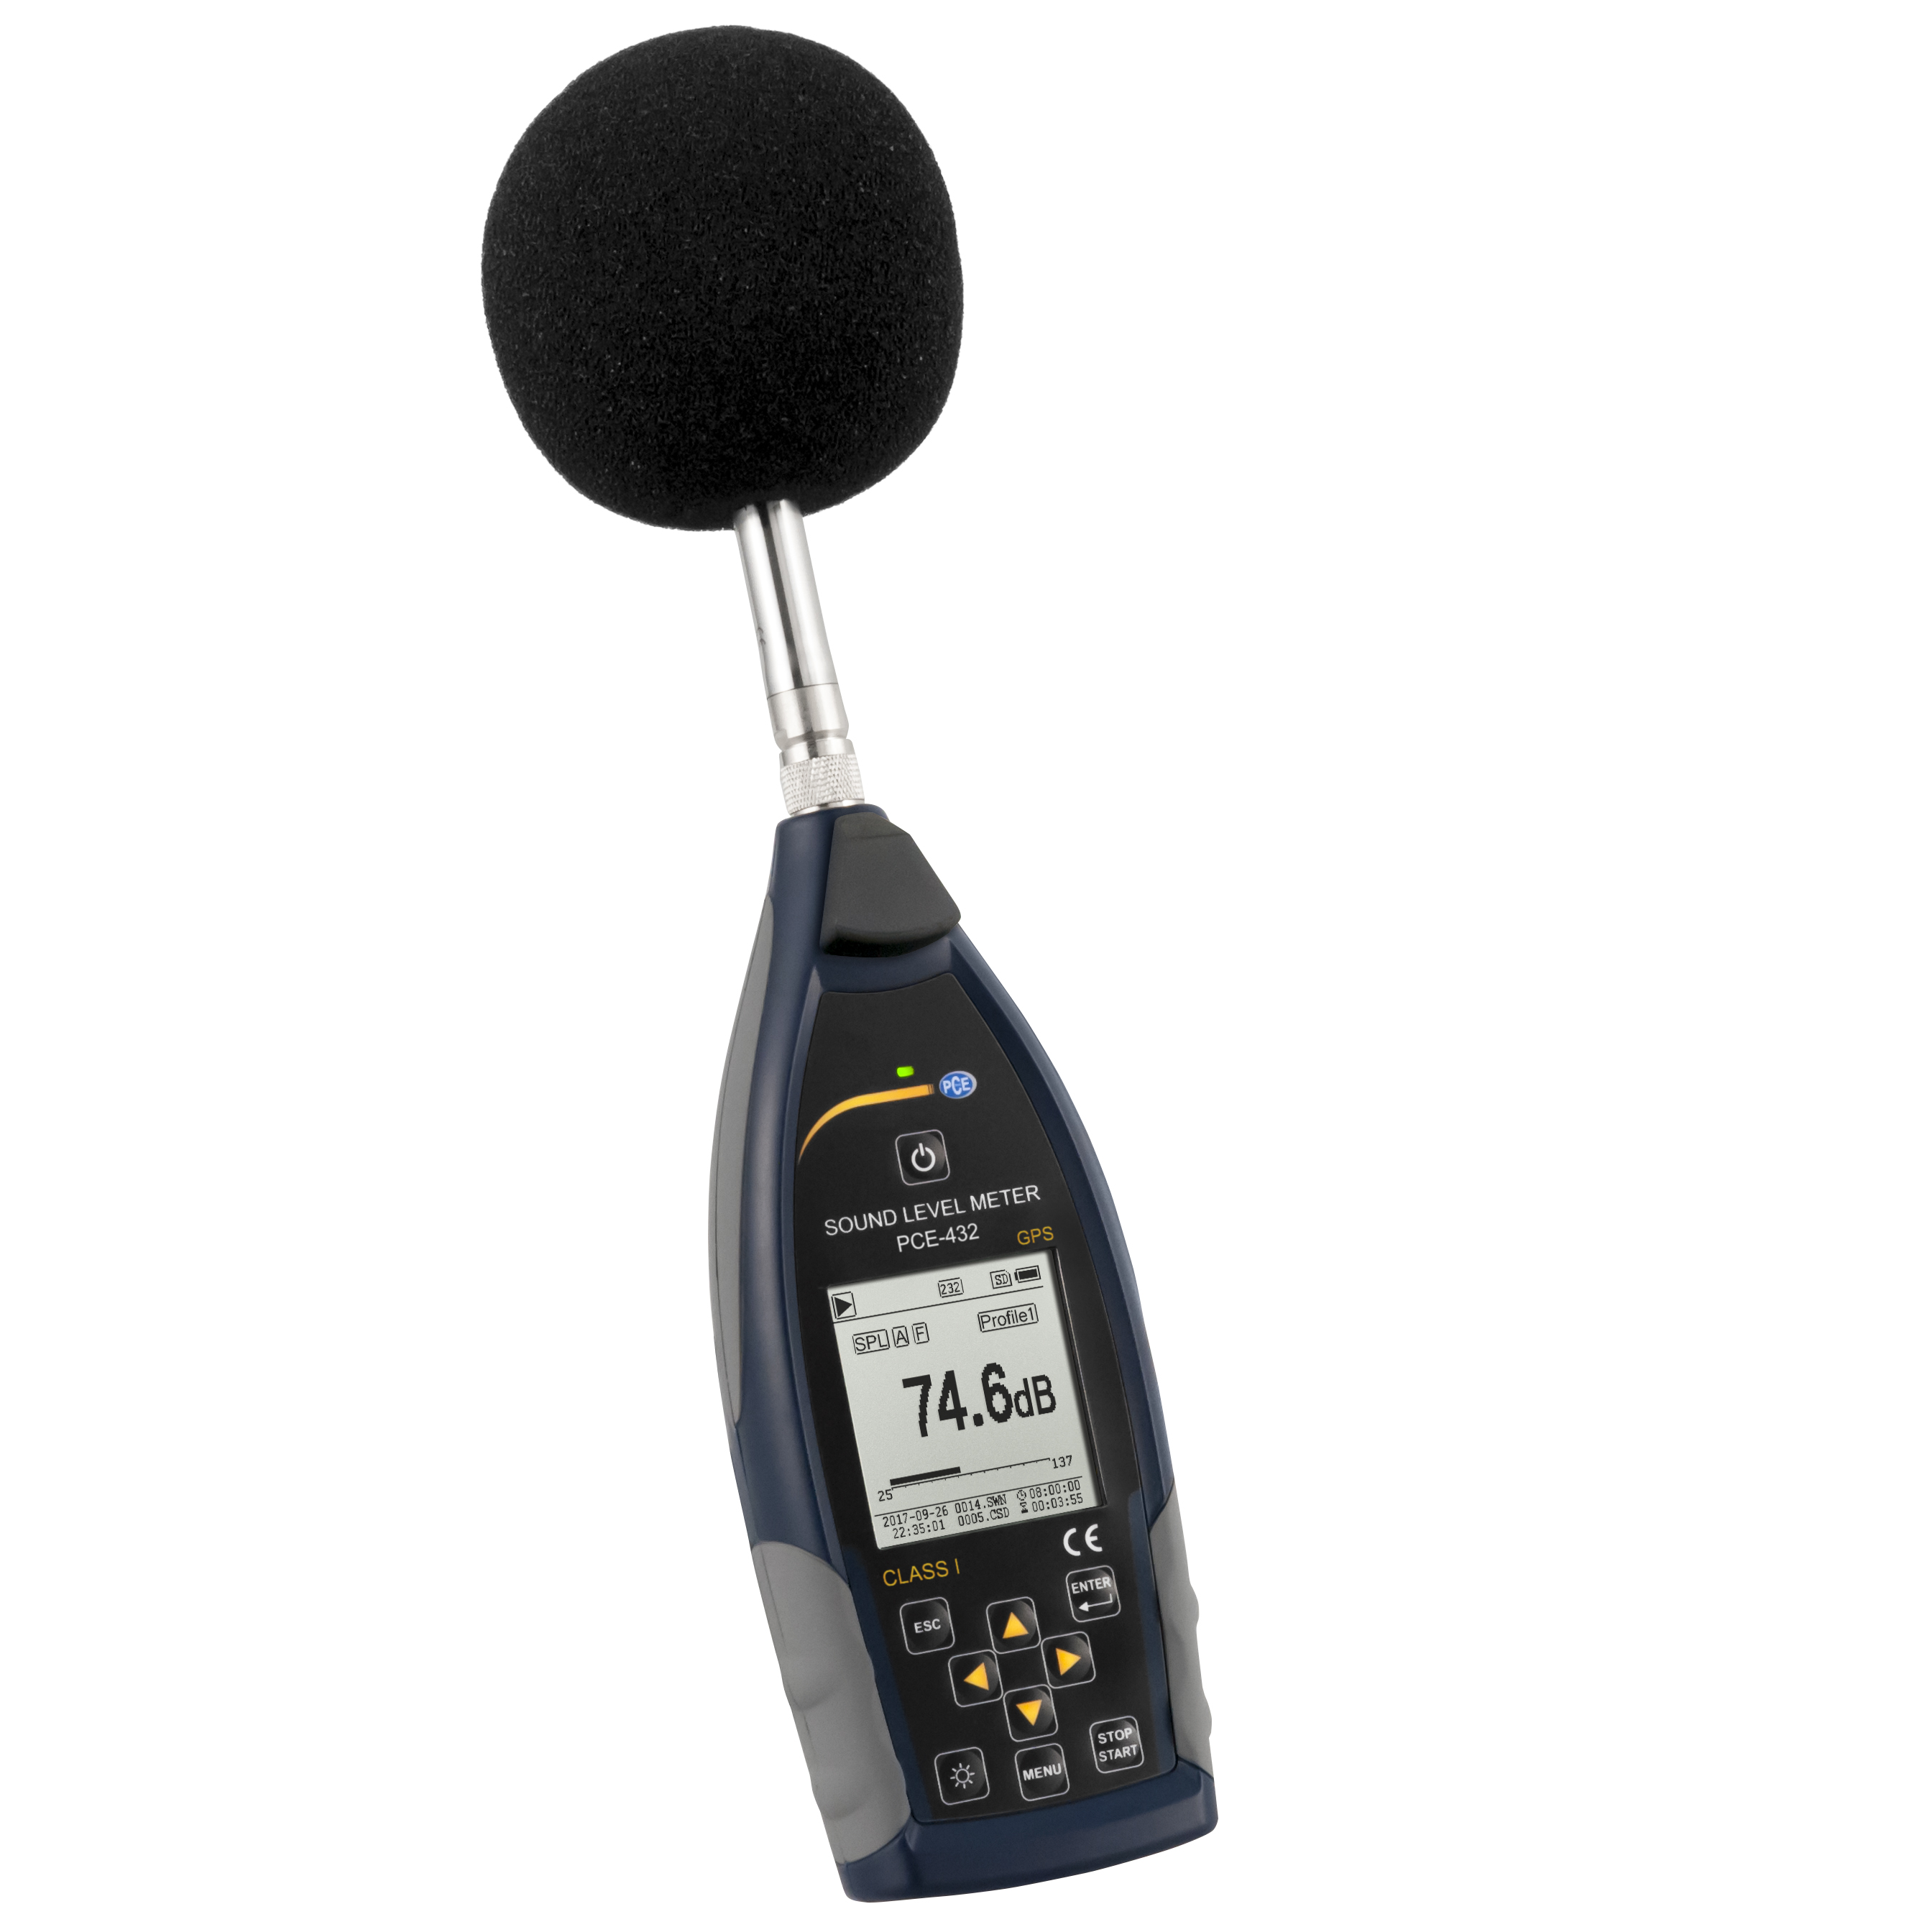 Class 1 sound level meter: PCE-432